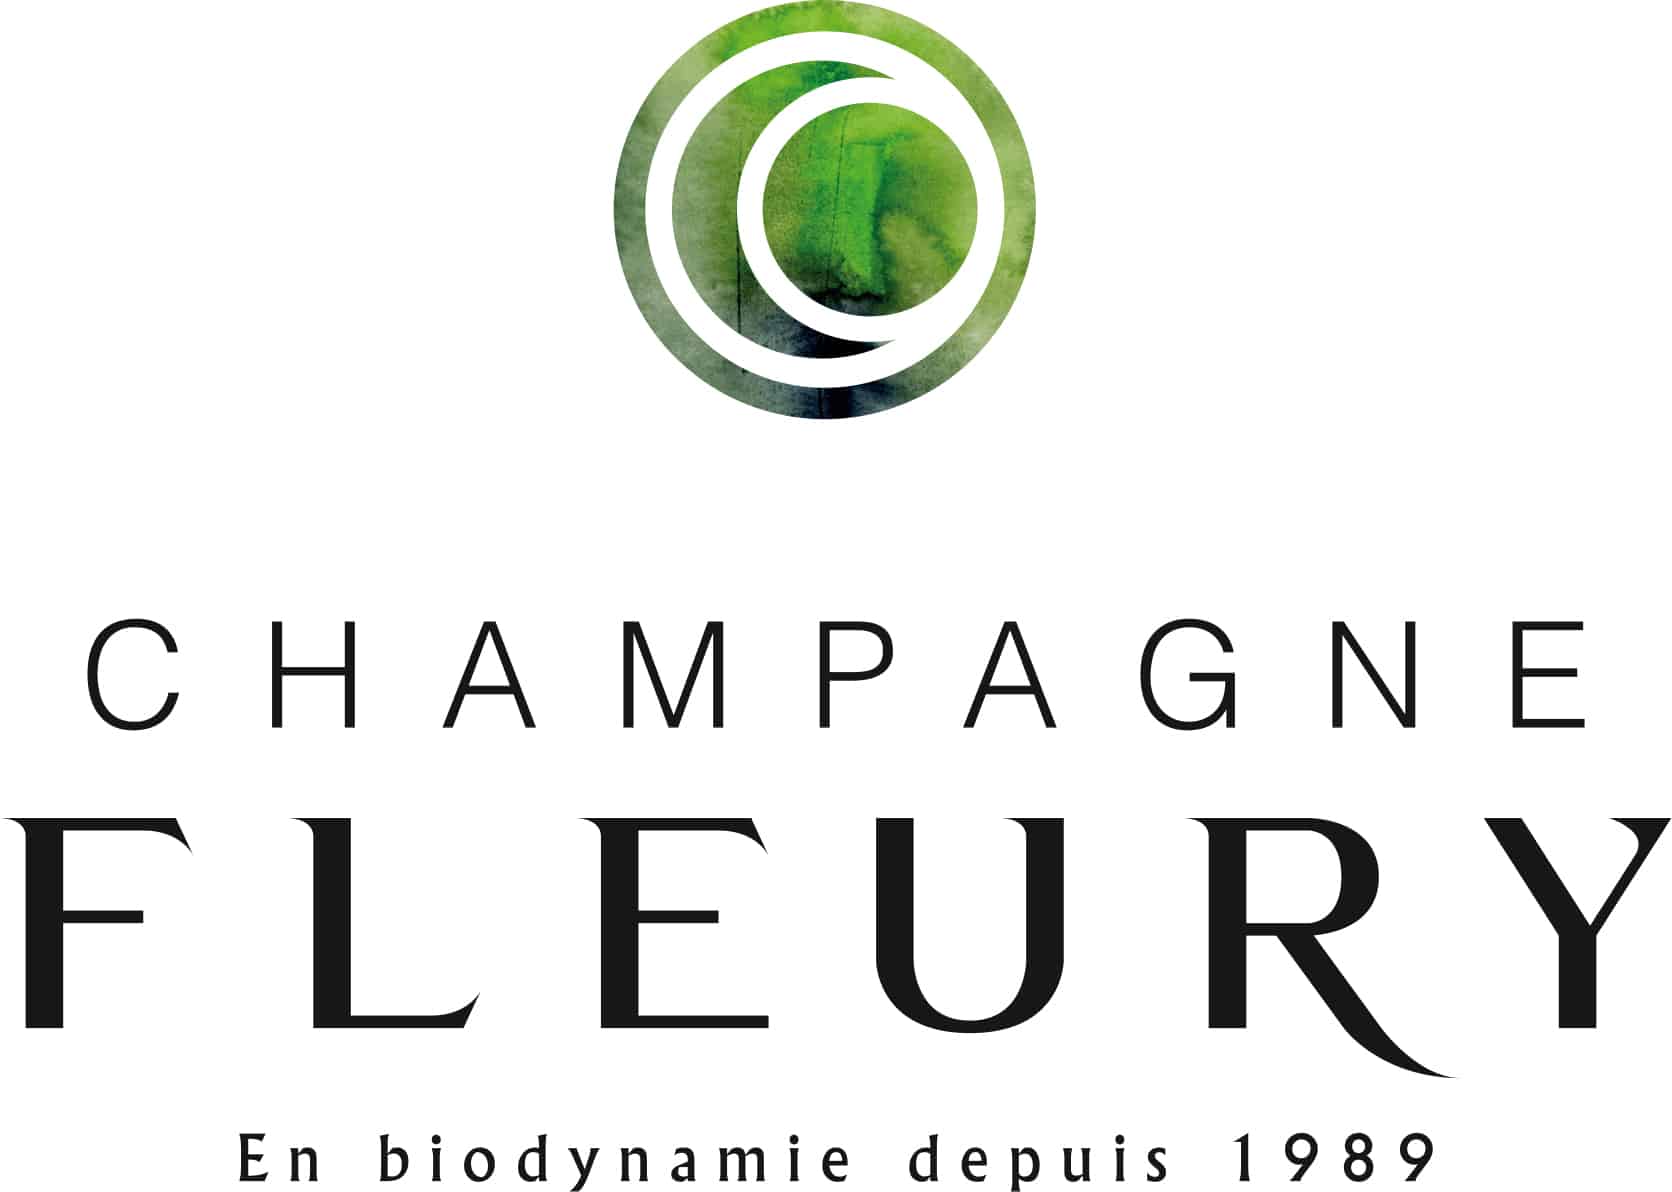 Champagne Fleury